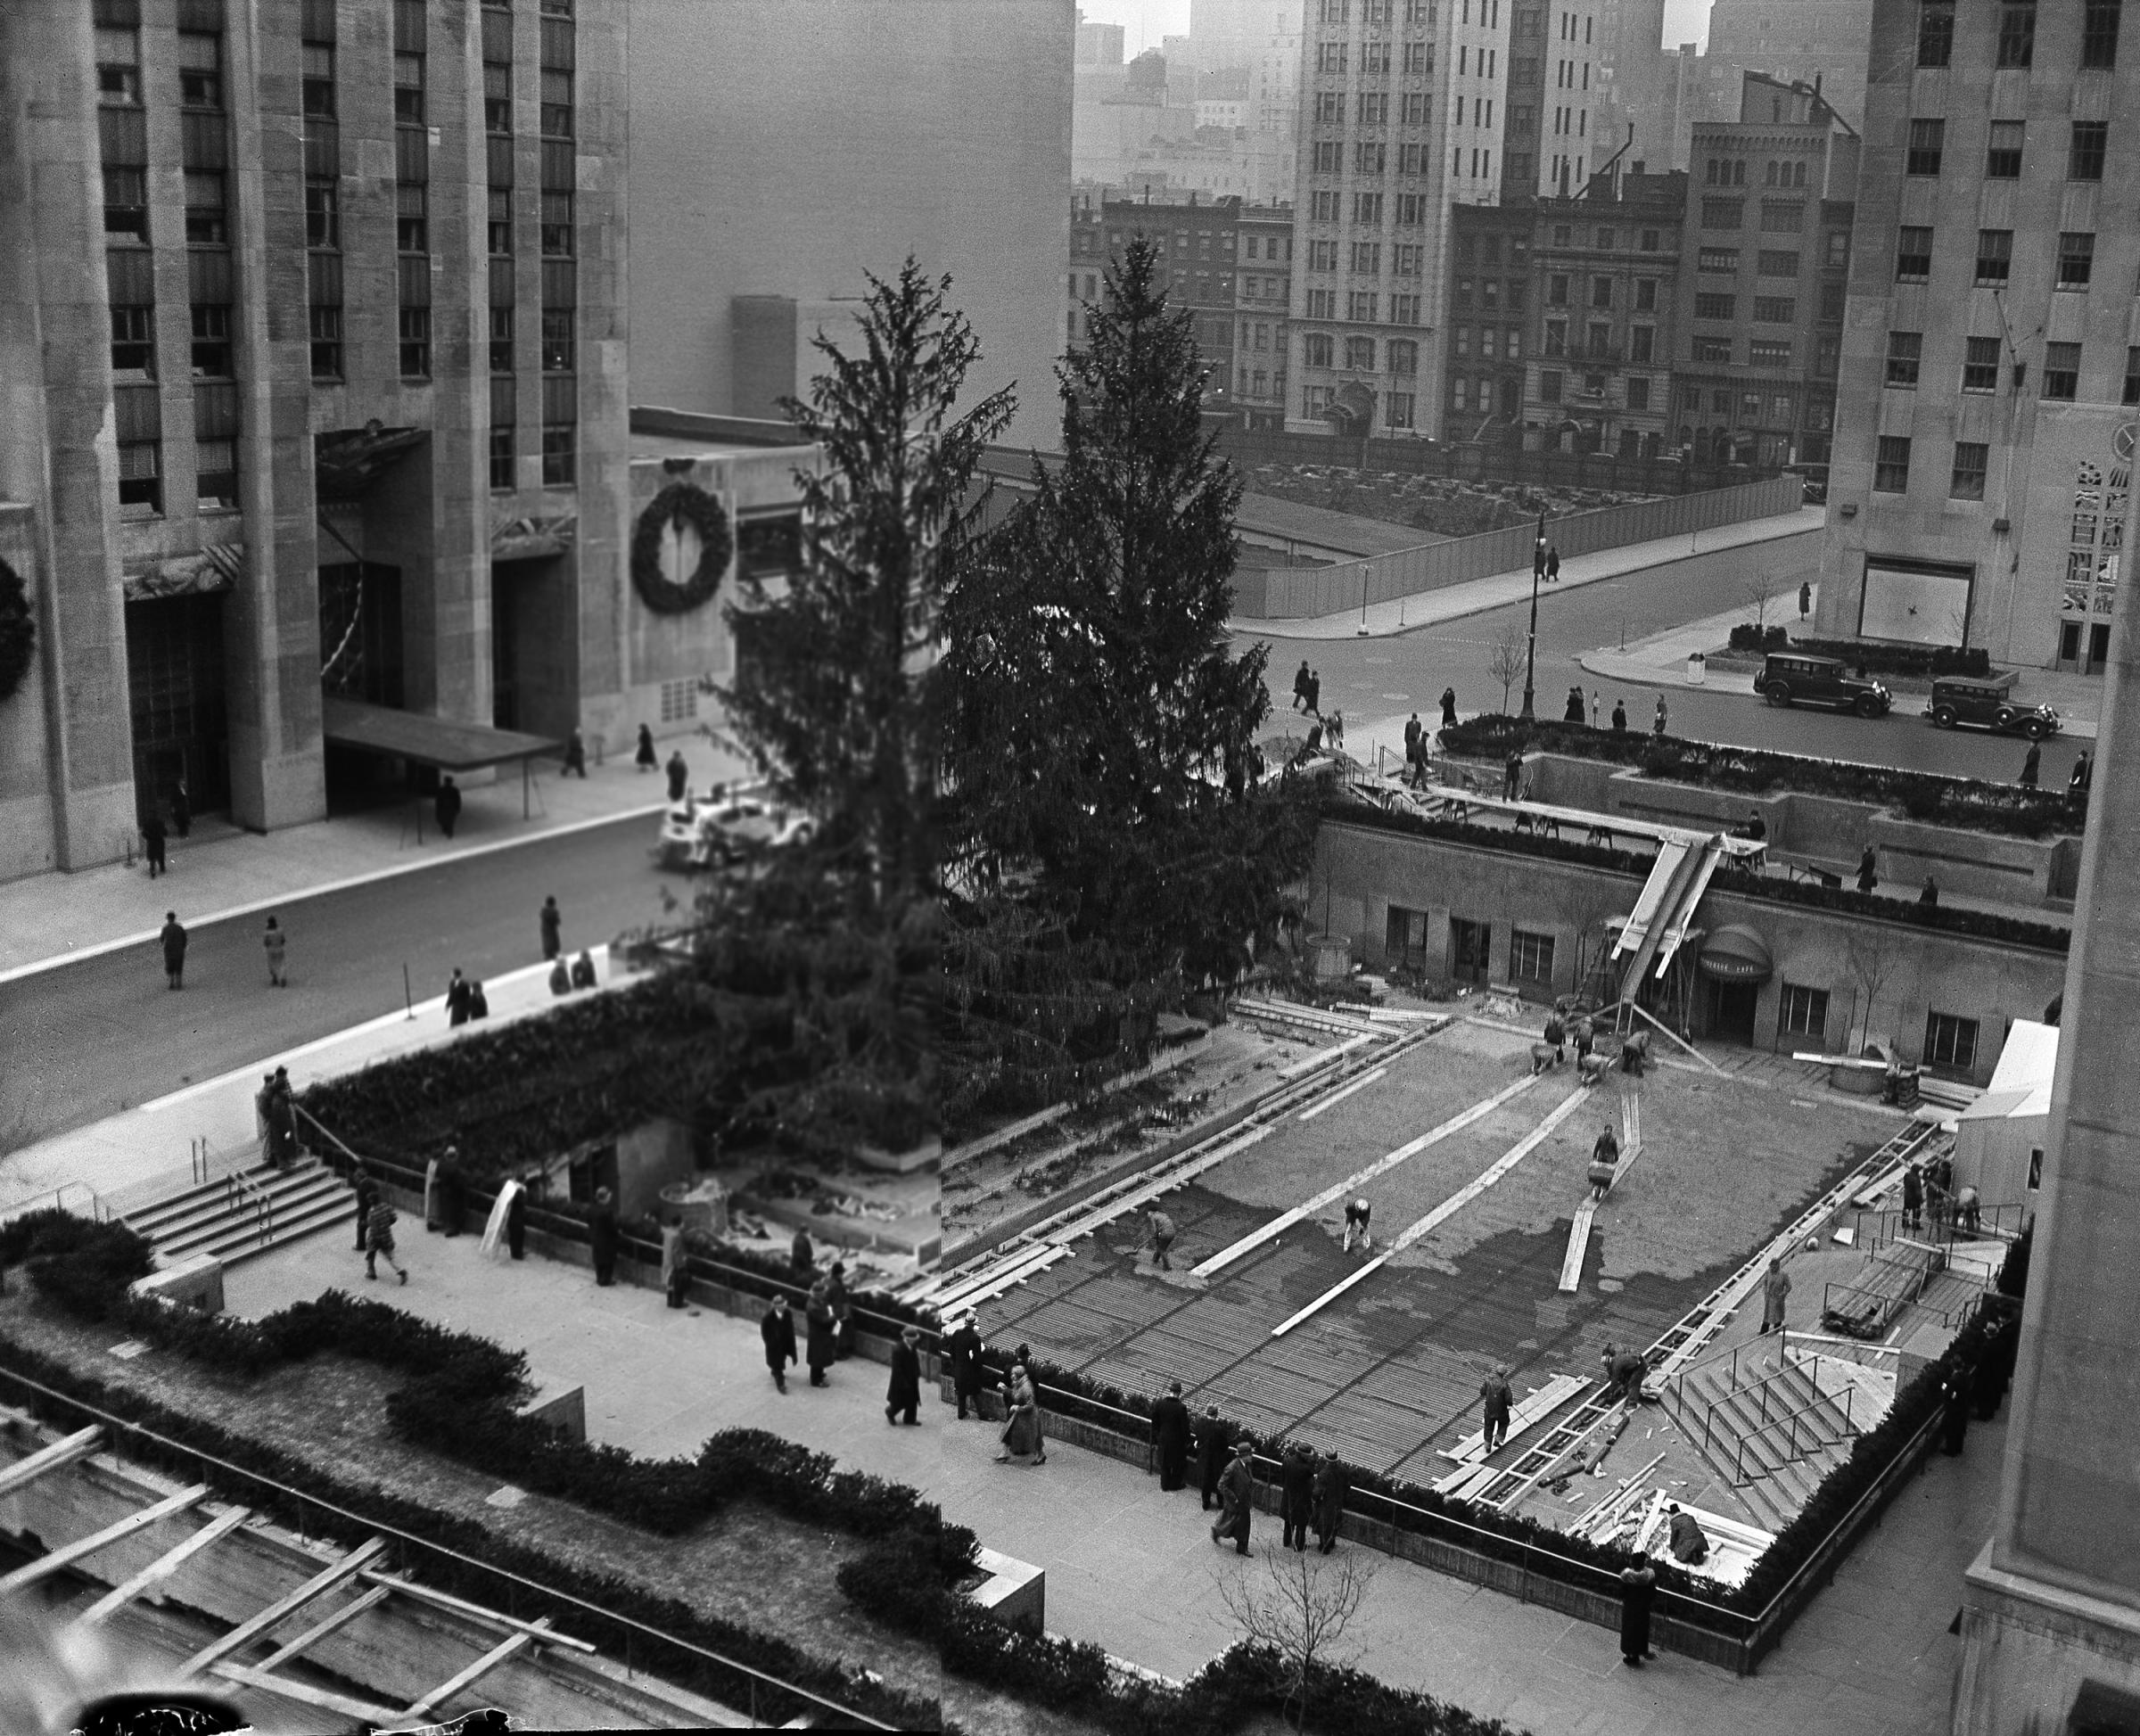 1936 Rockefeller Center Christmas Trees, celebrating the opening of the ice skating rink.